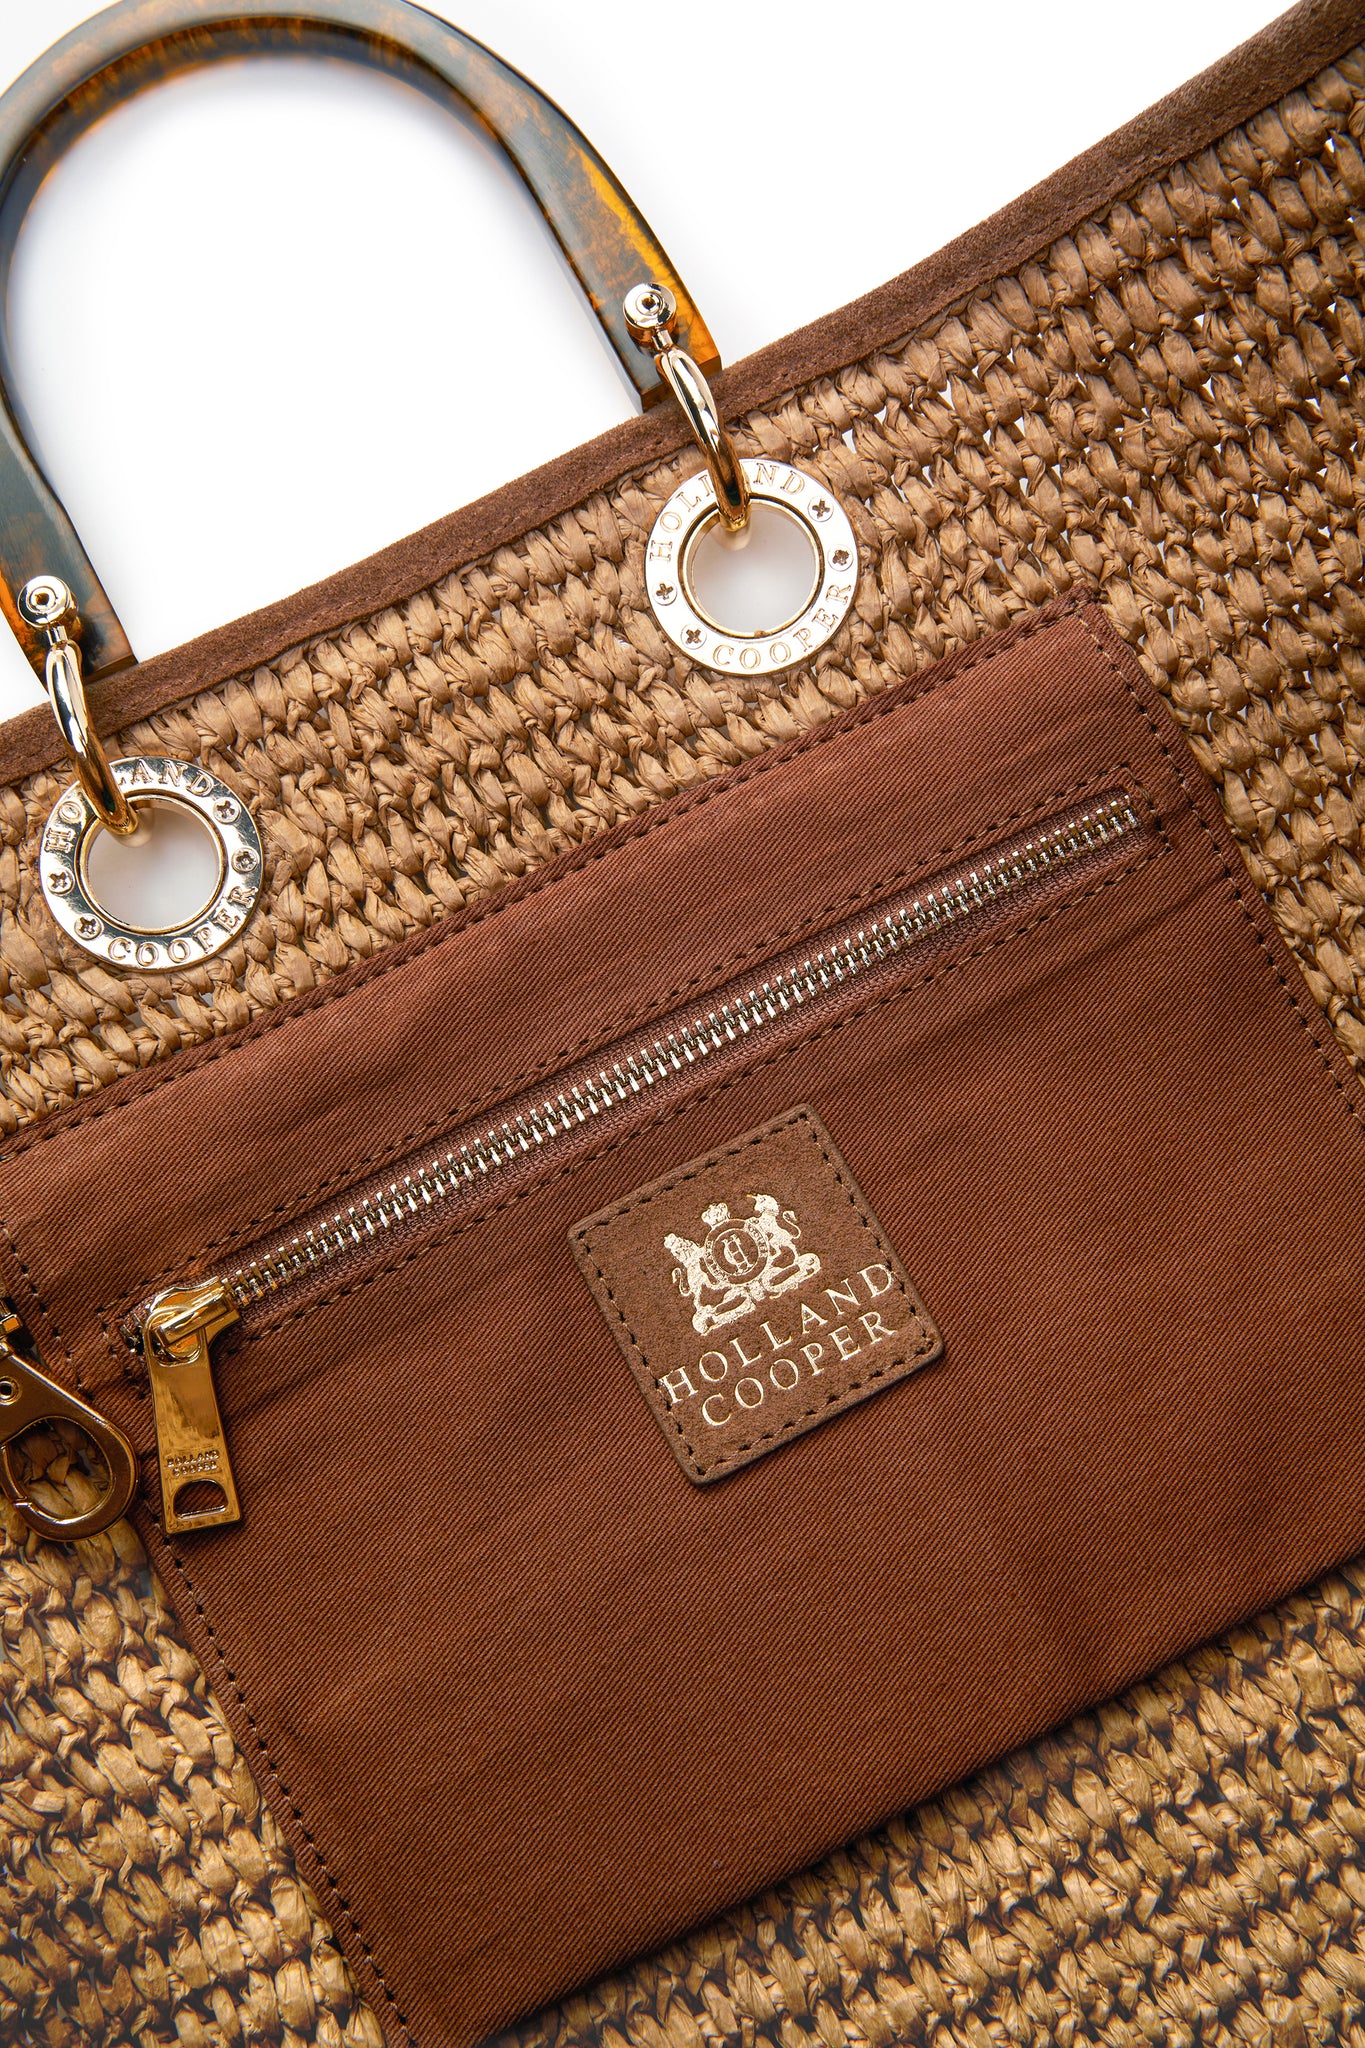 close up of inside tan zip pocket and tortoiseshell handles on natural raffia tote bag